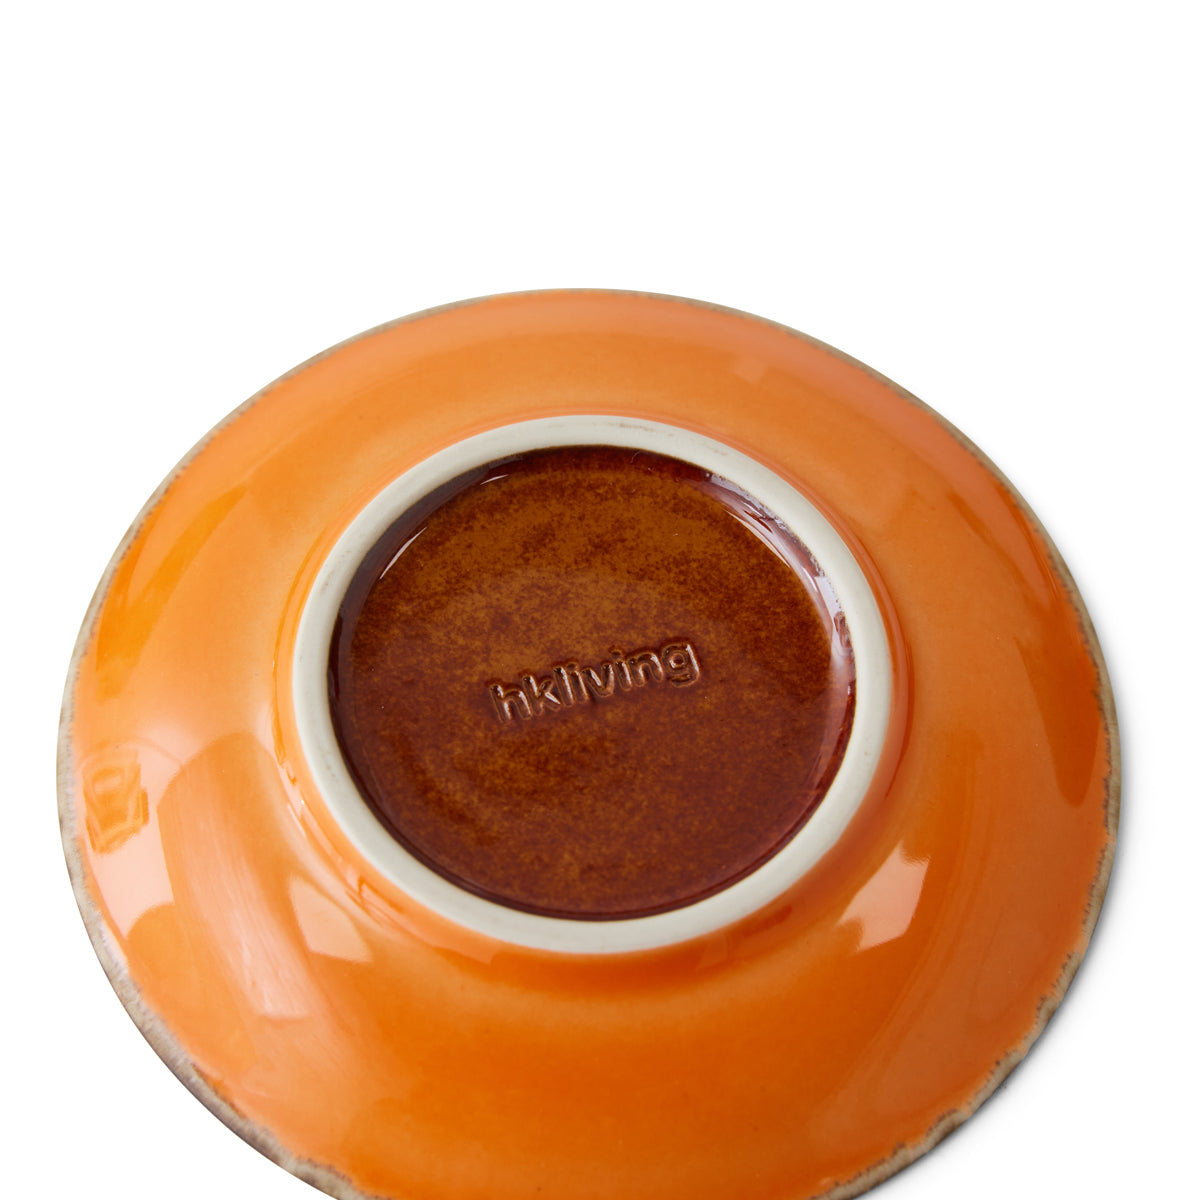 HKLiving 70s Ceramics: Saucer Light Roast ACE7306